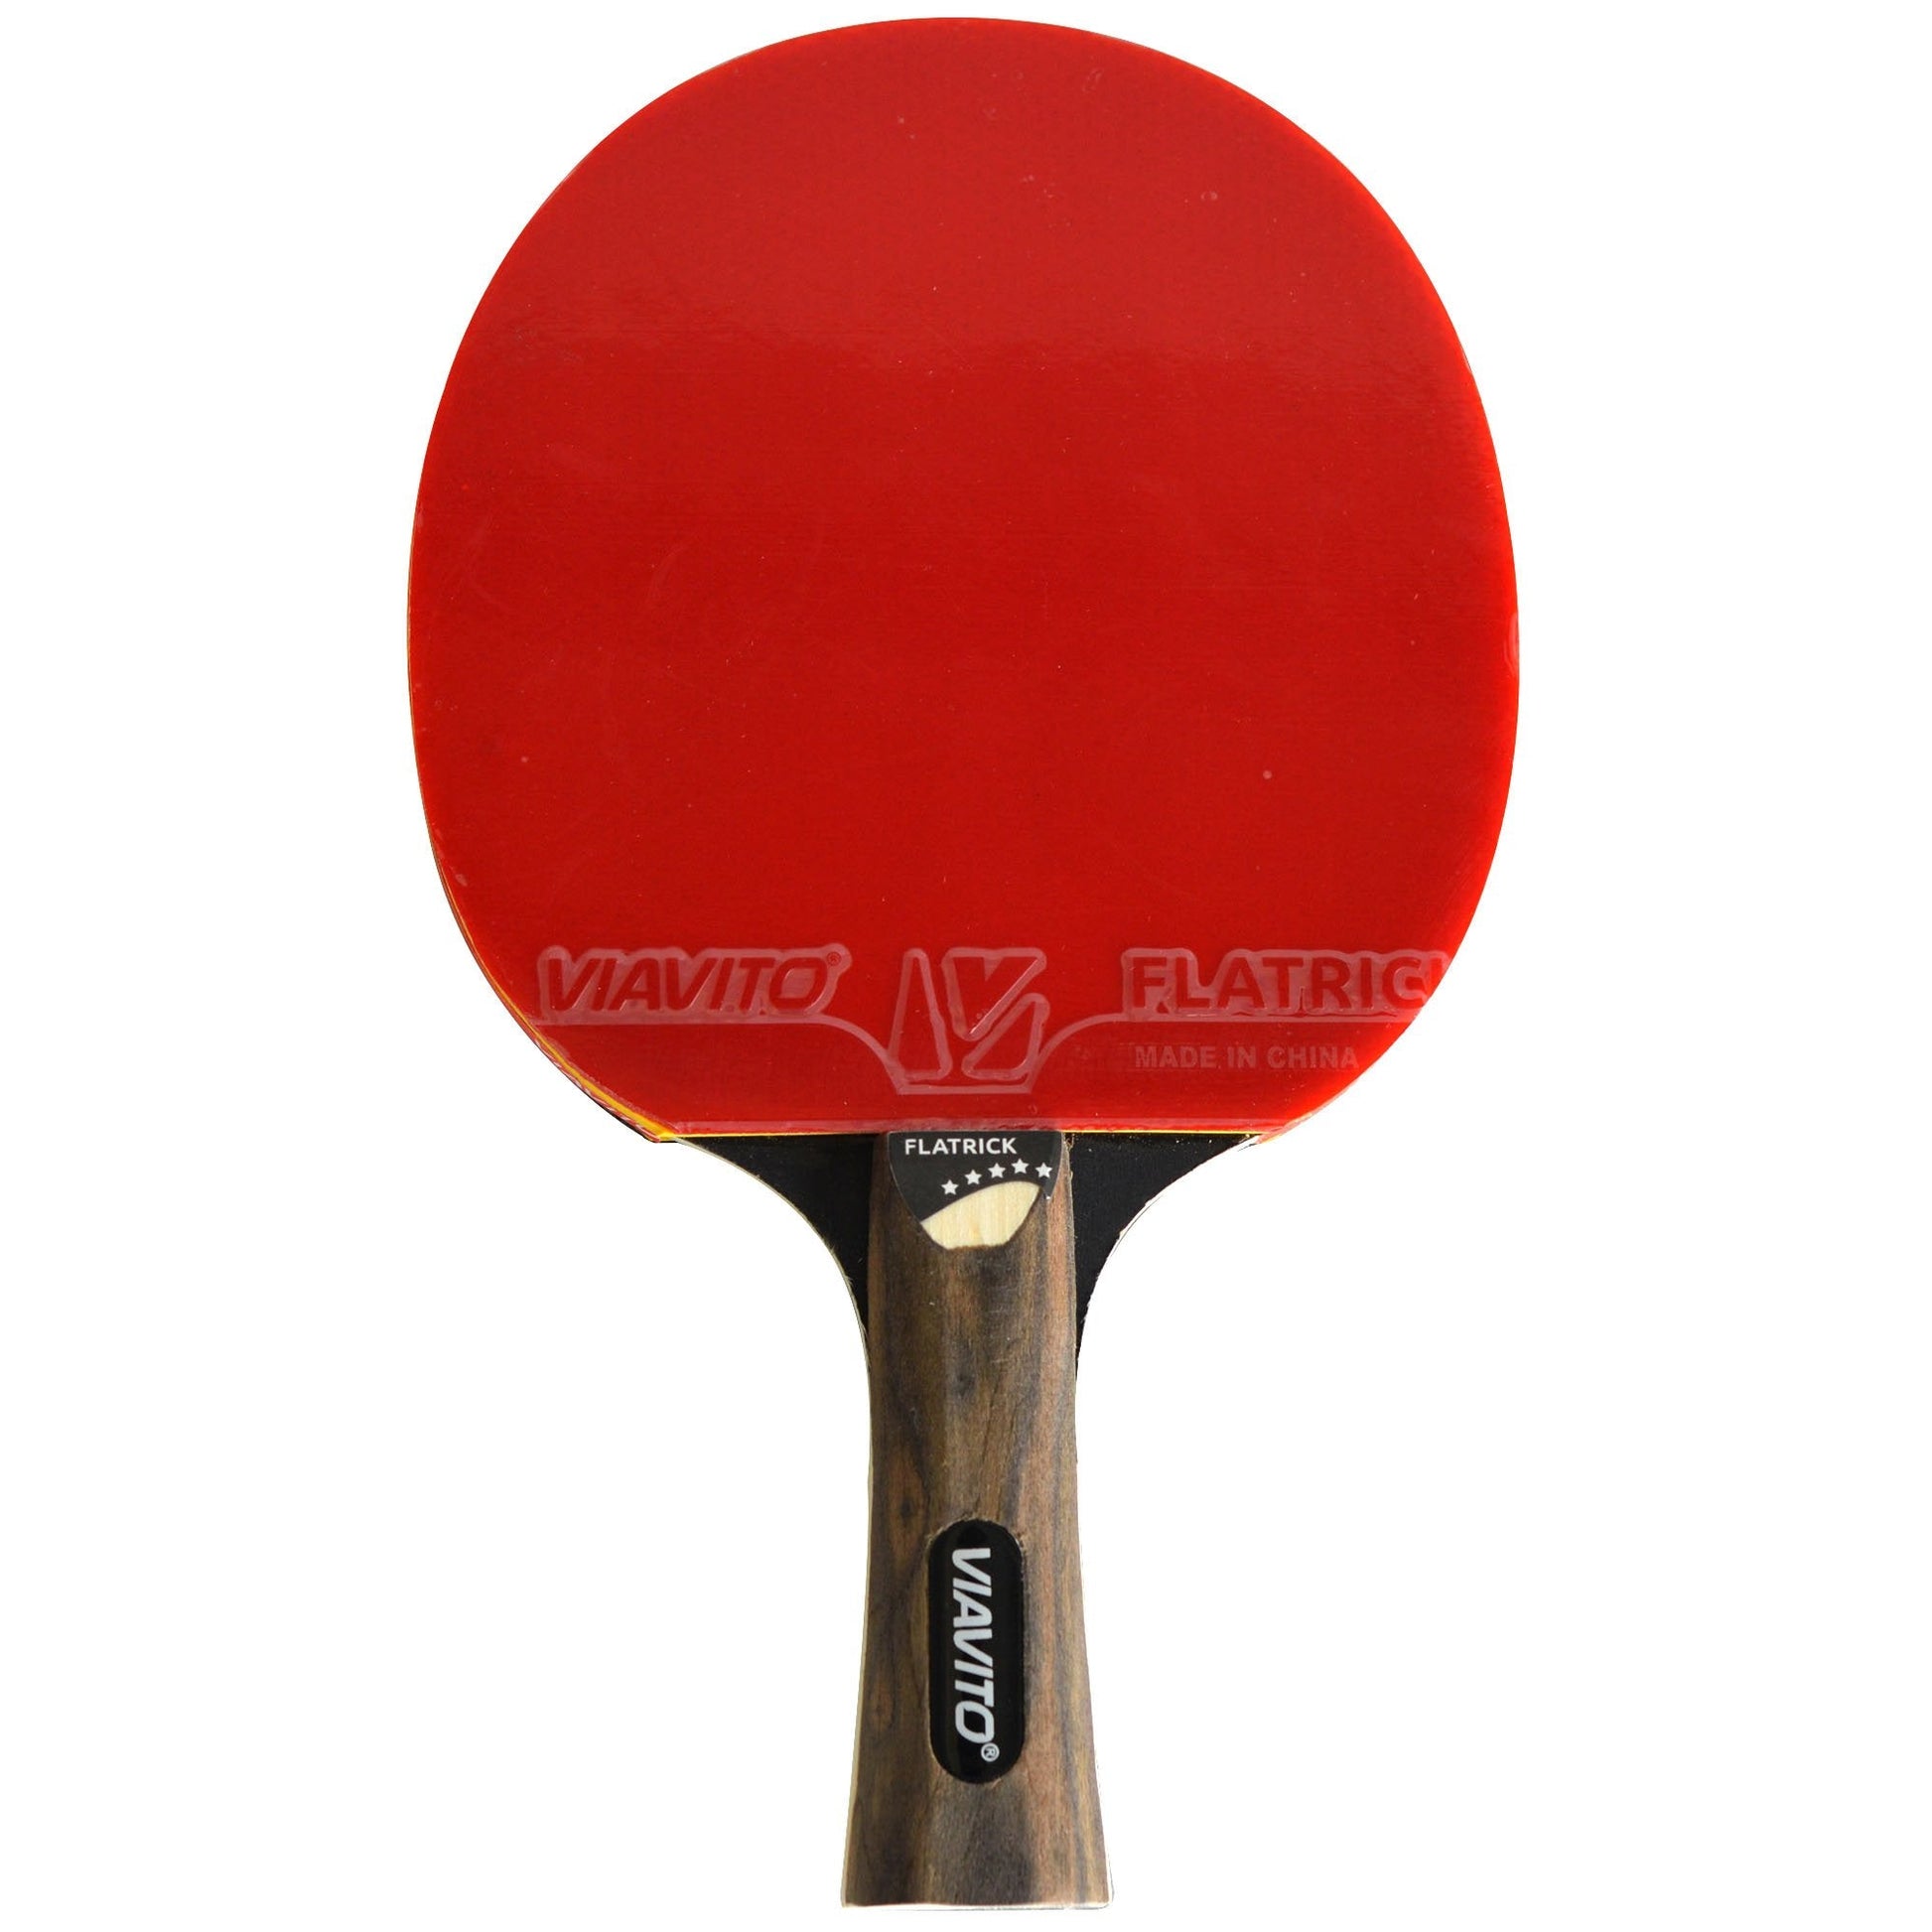 |Viavito FlaTrick Table Tennis Bat - Front|